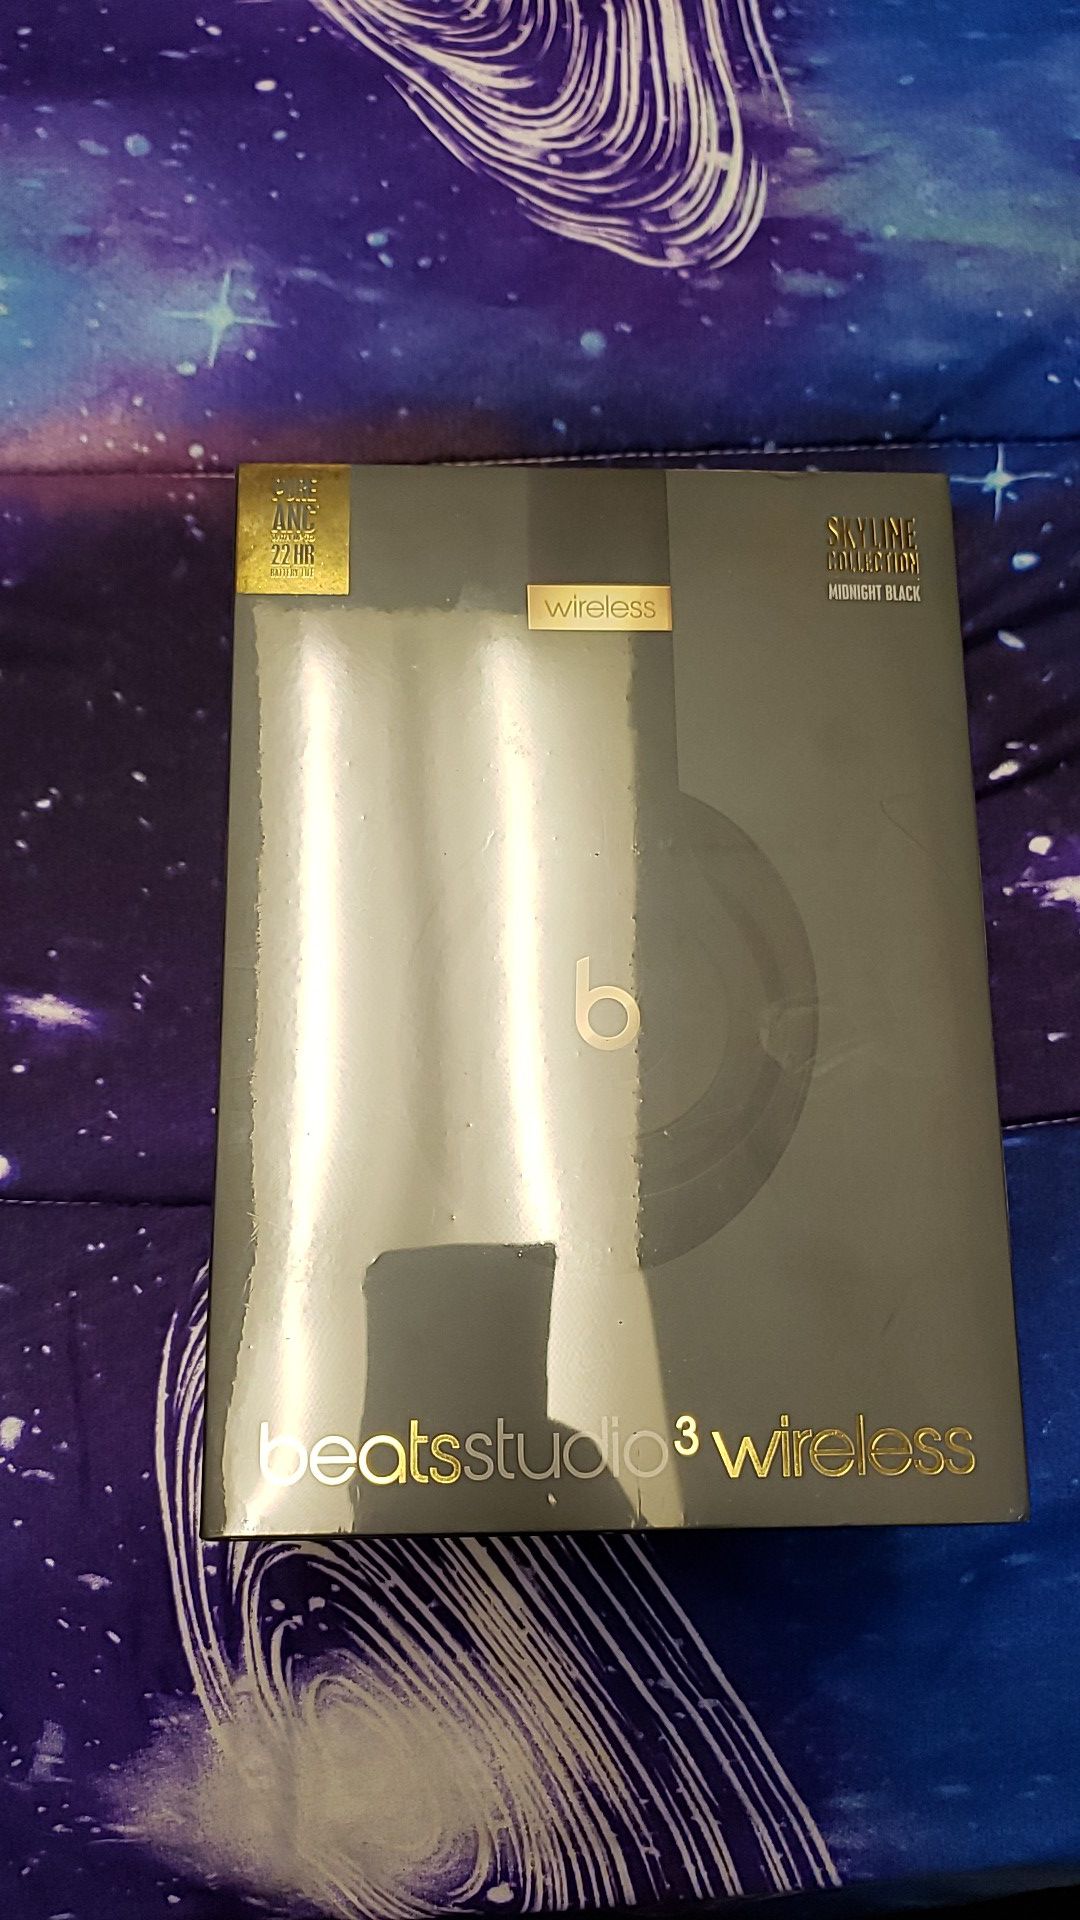 Beats stuido3 wireless